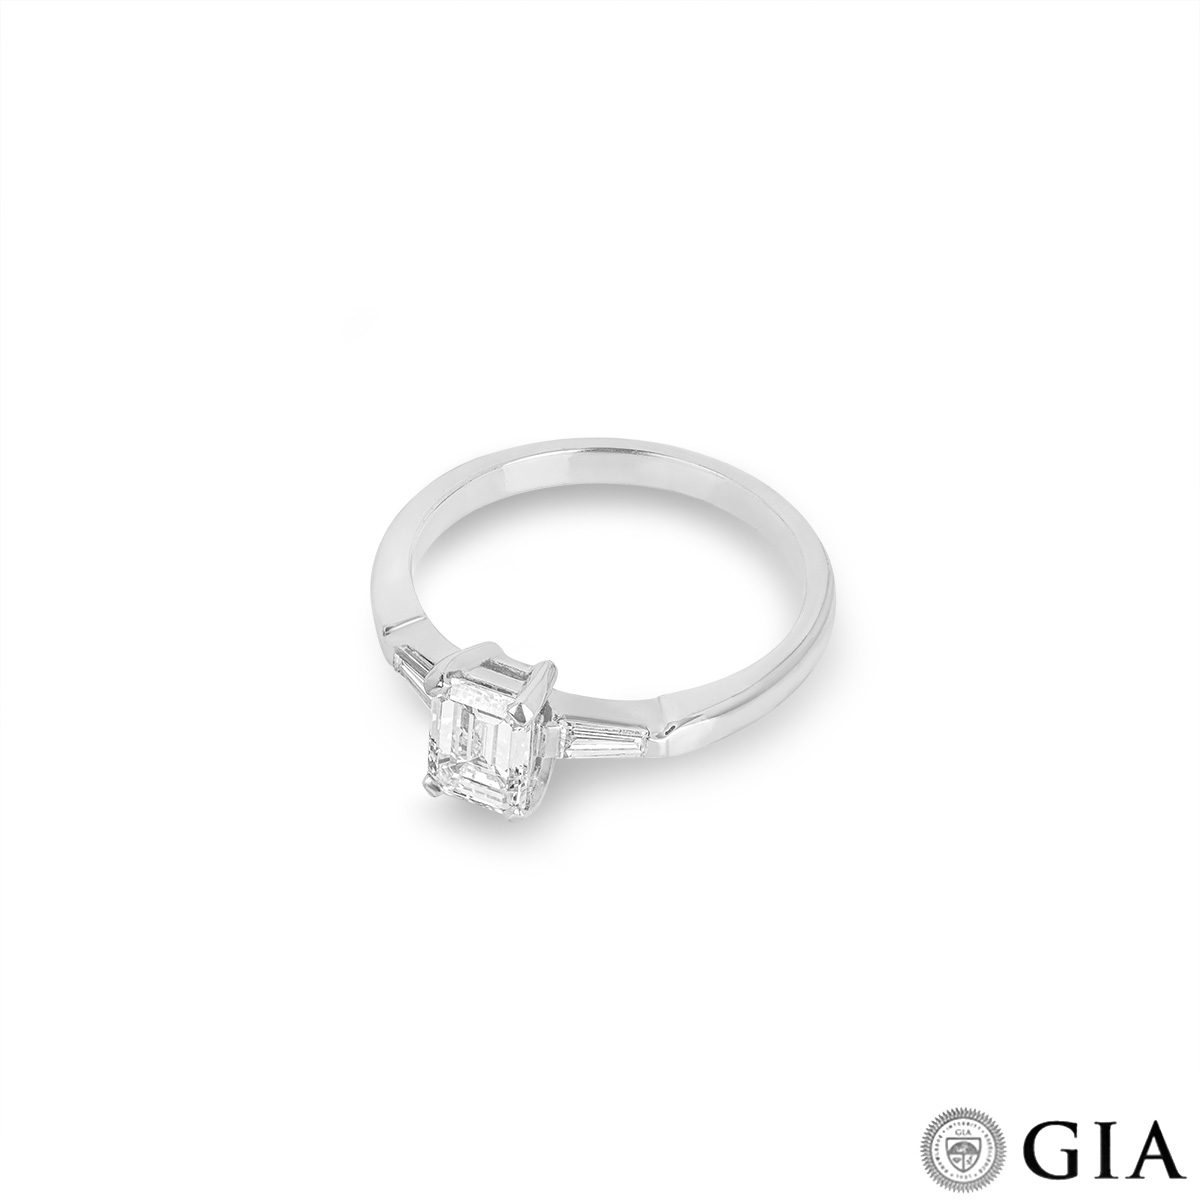 White Gold Emerald Cut Diamond Ring 1.18ct G/VVS2